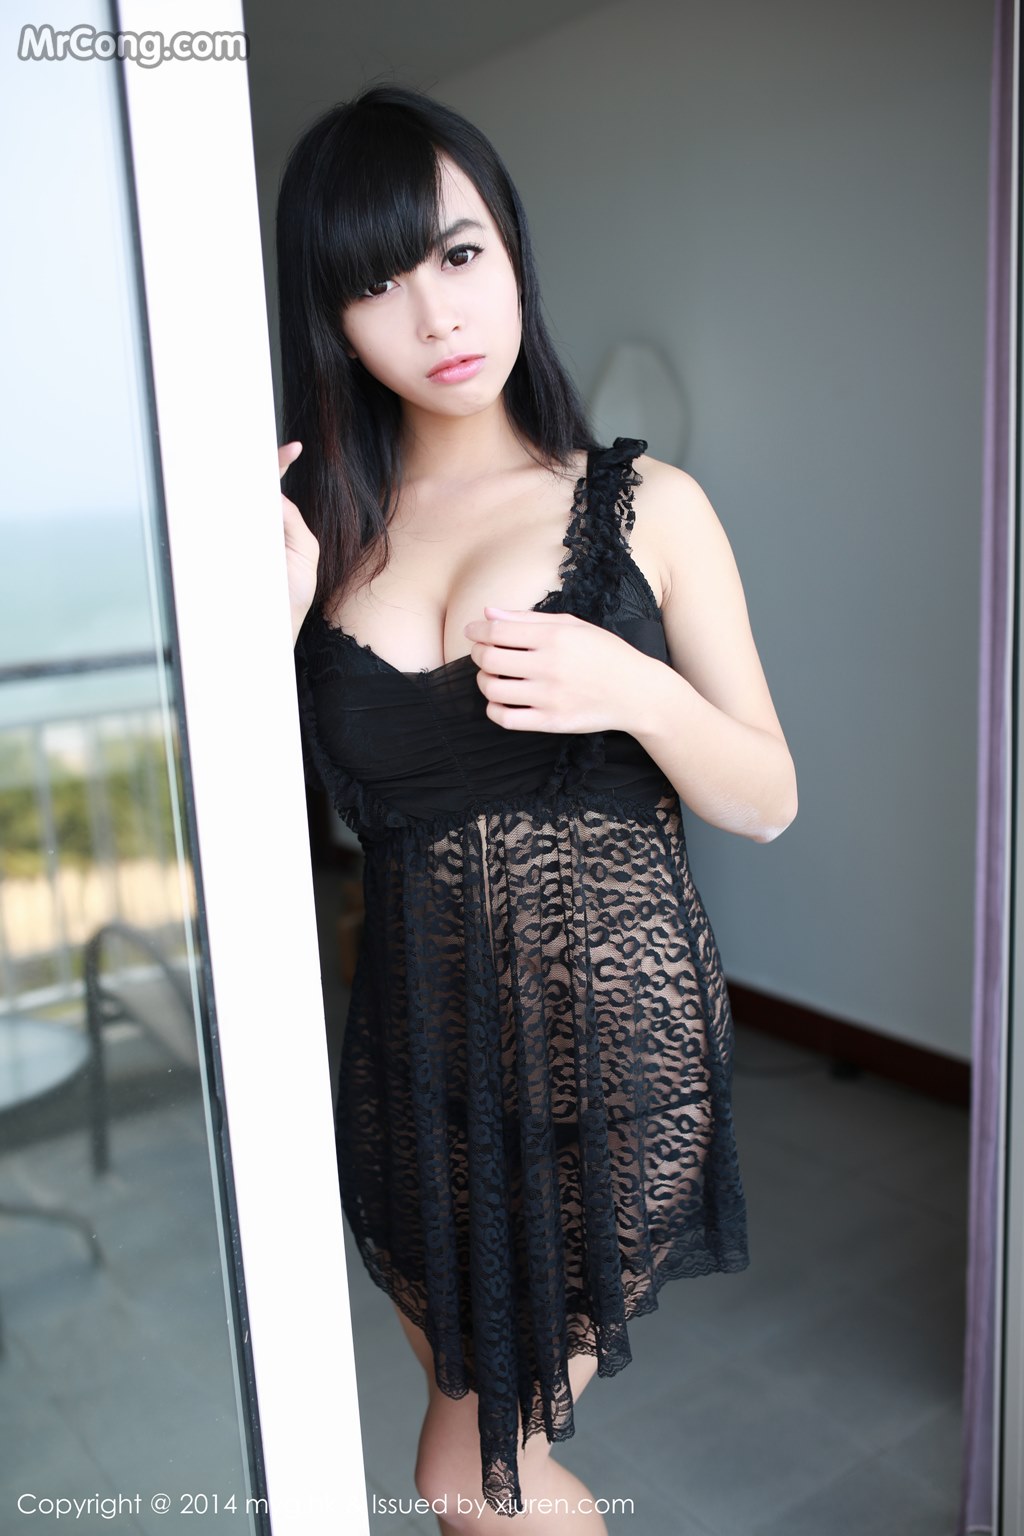 MyGirl Vol.033: Model Christine (黄 可) (70 photos) photo 1-13